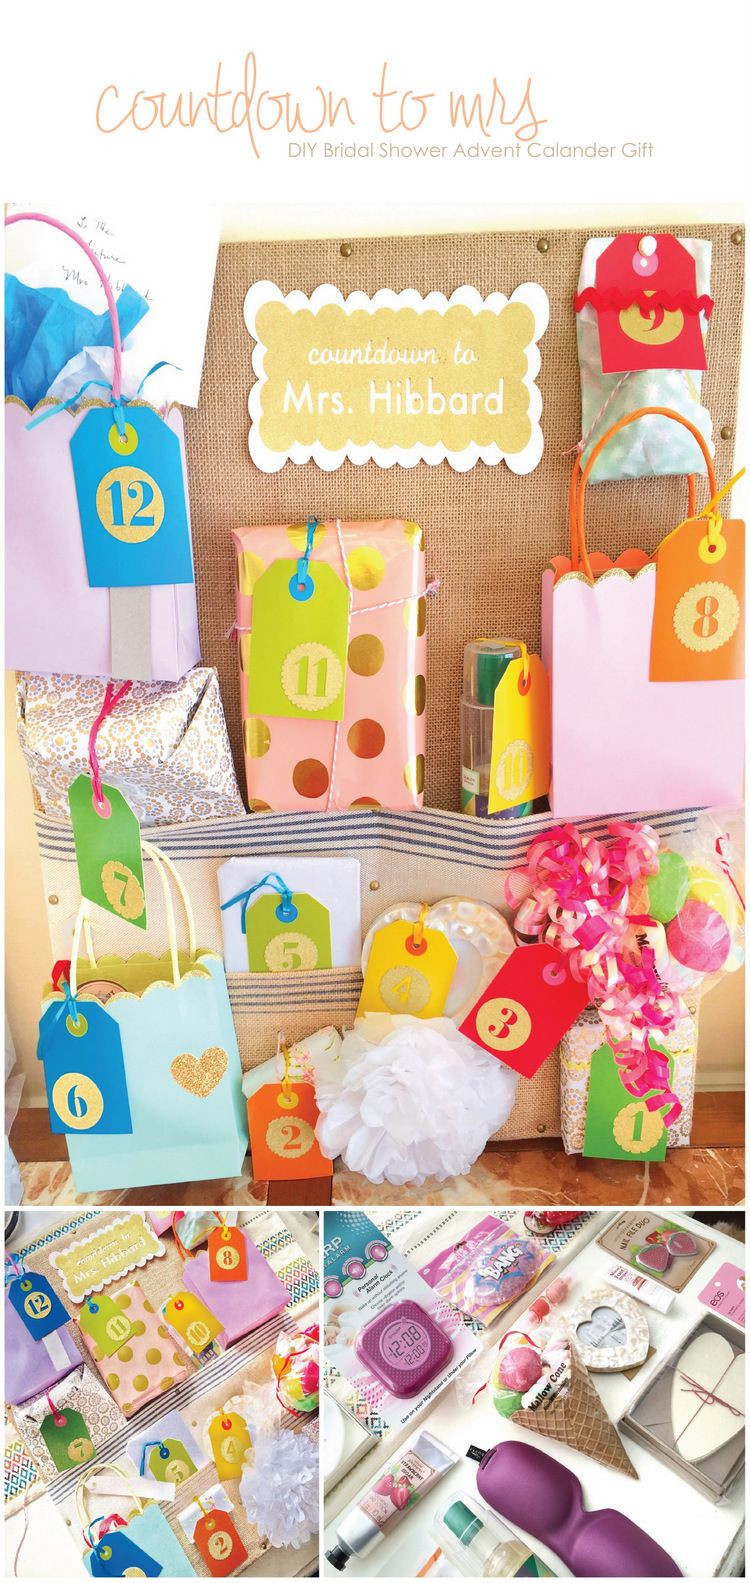 Best ideas about Advent Calendar Gift Ideas
. Save or Pin DIY Bridal Shower Advent Calendar Gift 12 Fun Gift Ideas Now.